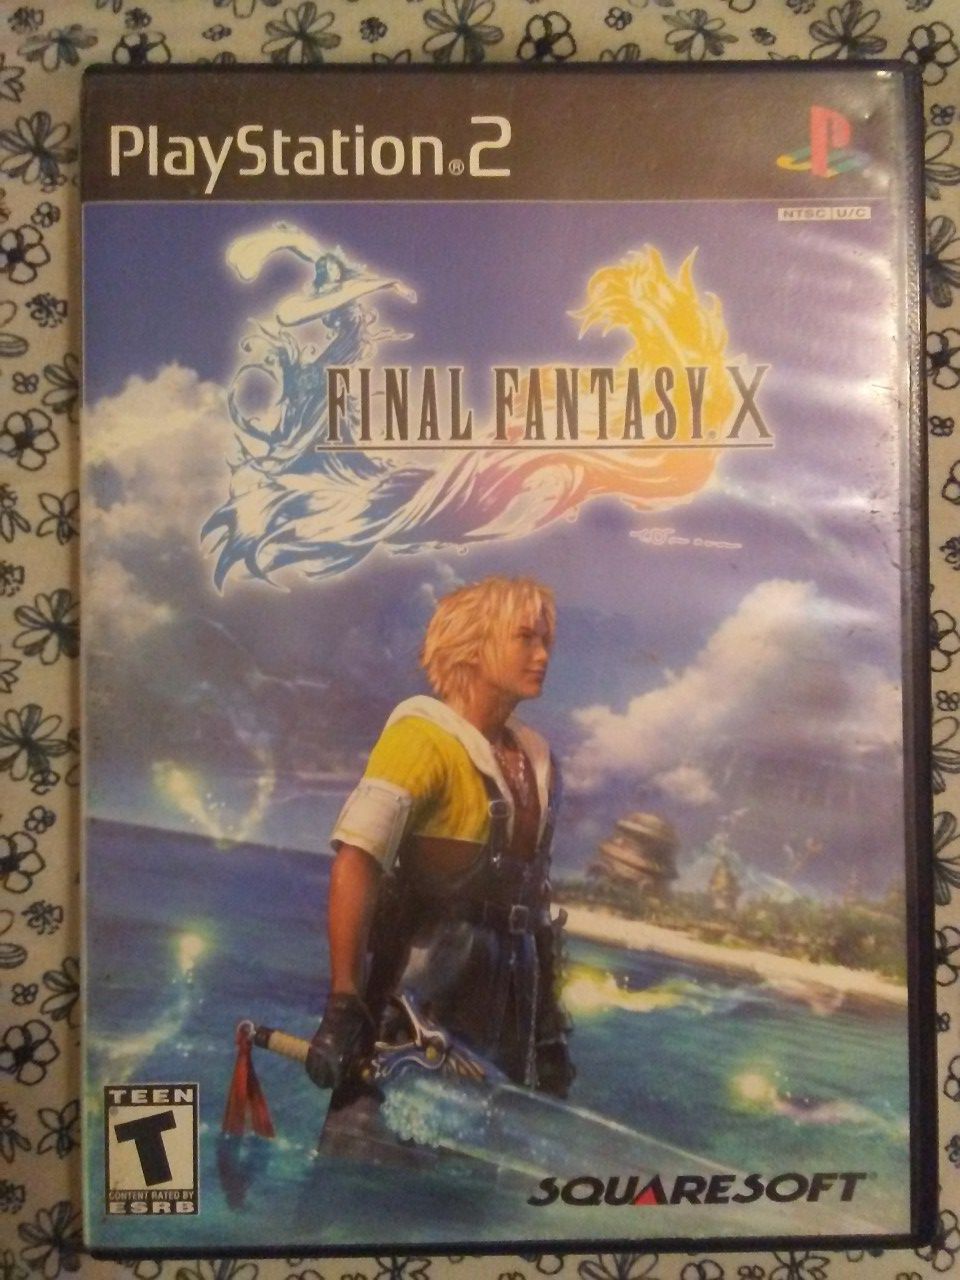 Final Fantasy 5 PS2, Sims PS2 and SimCity2000